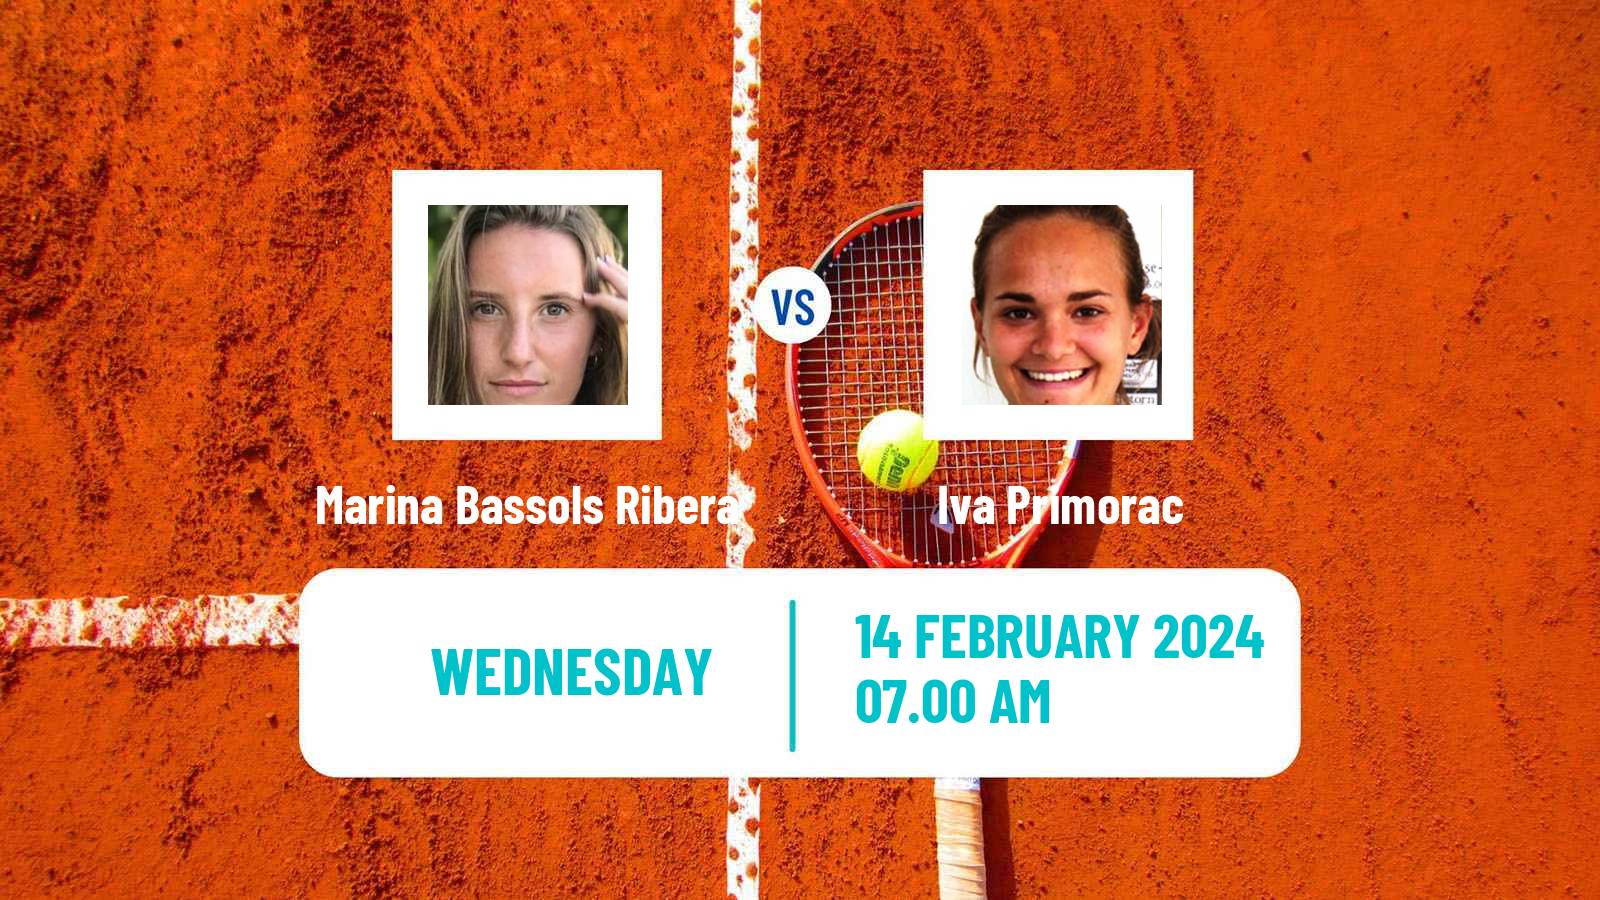 Tennis ITF W75 Altenkirchen Women Marina Bassols Ribera - Iva Primorac